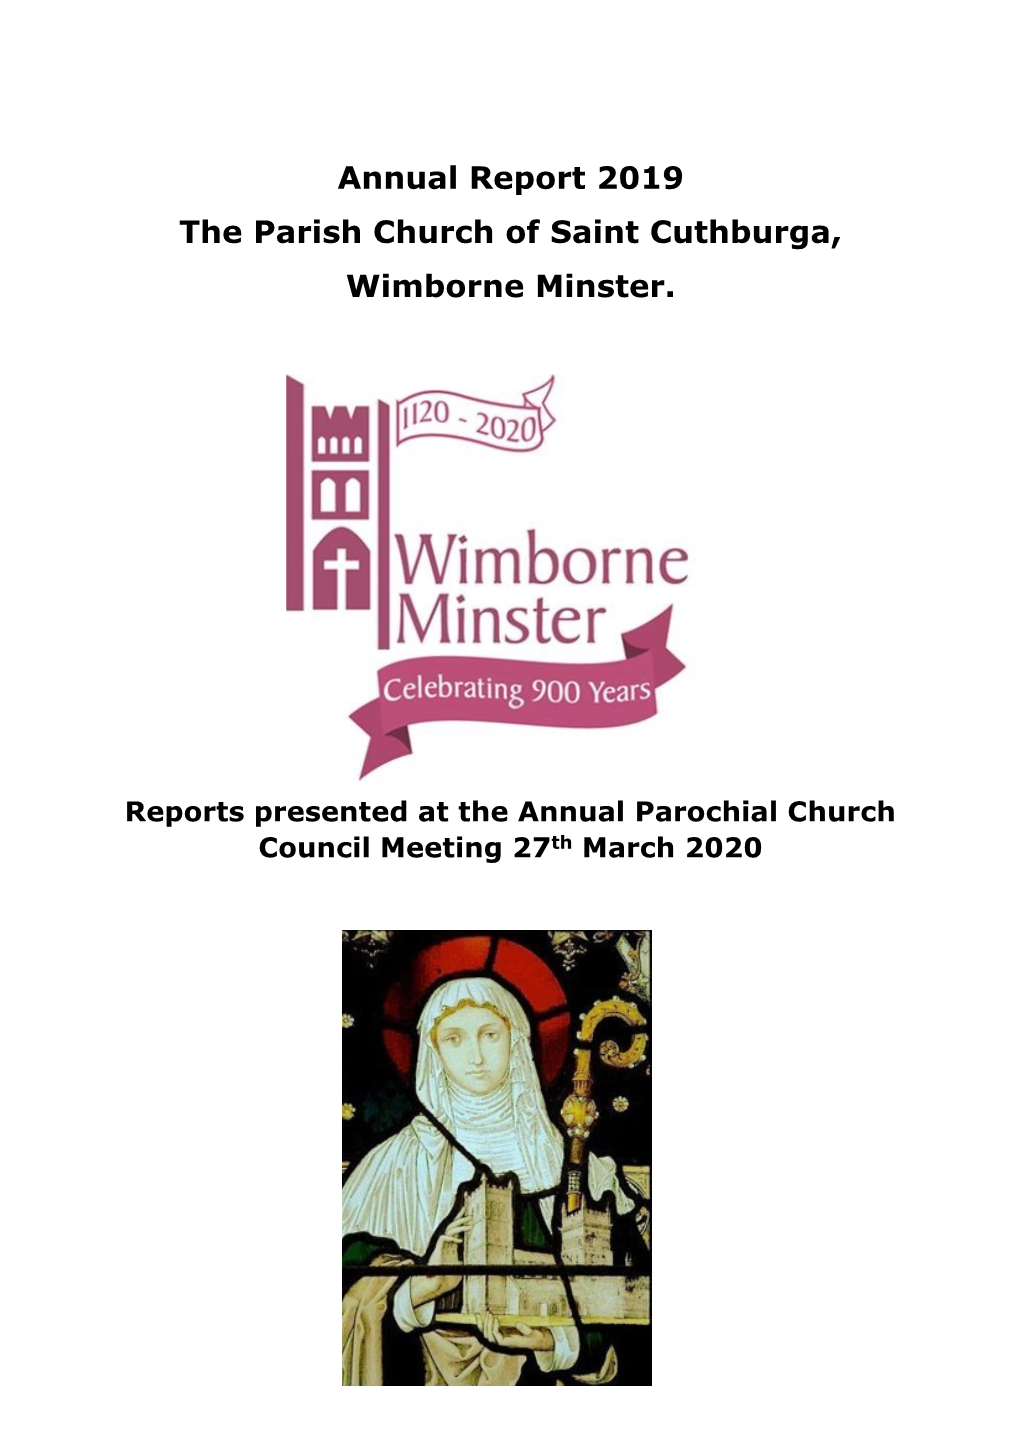 Annual Report 2019 the Parish Church of Saint Cuthburga, Wimborne Minster